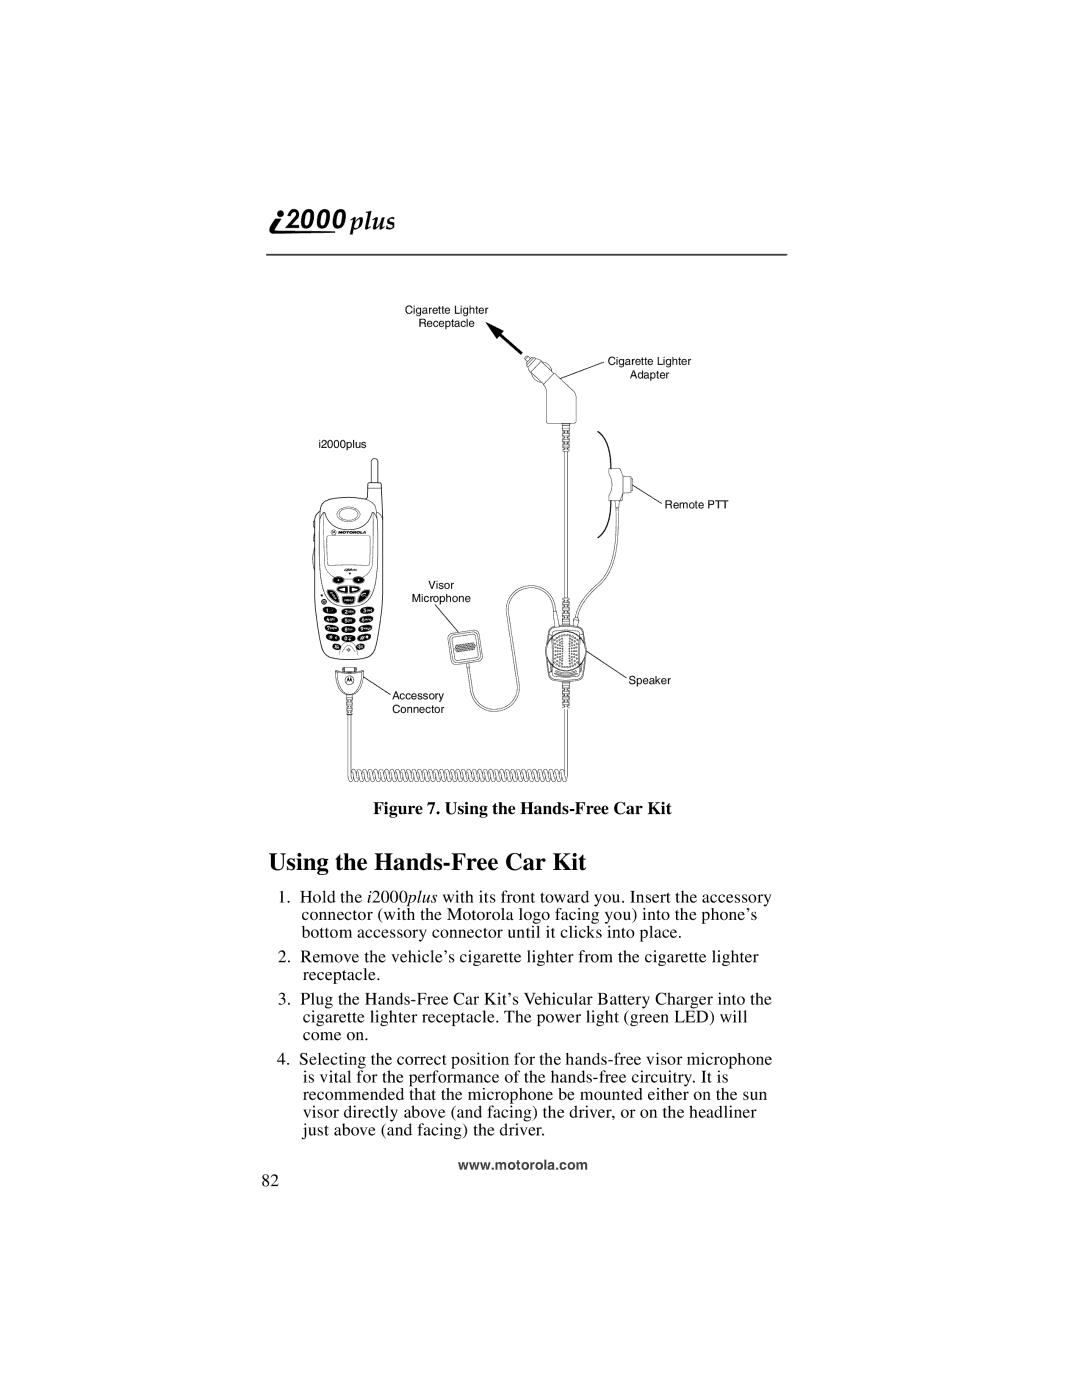 Motorola i2000plus manual Using the Hands-Free Car Kit 